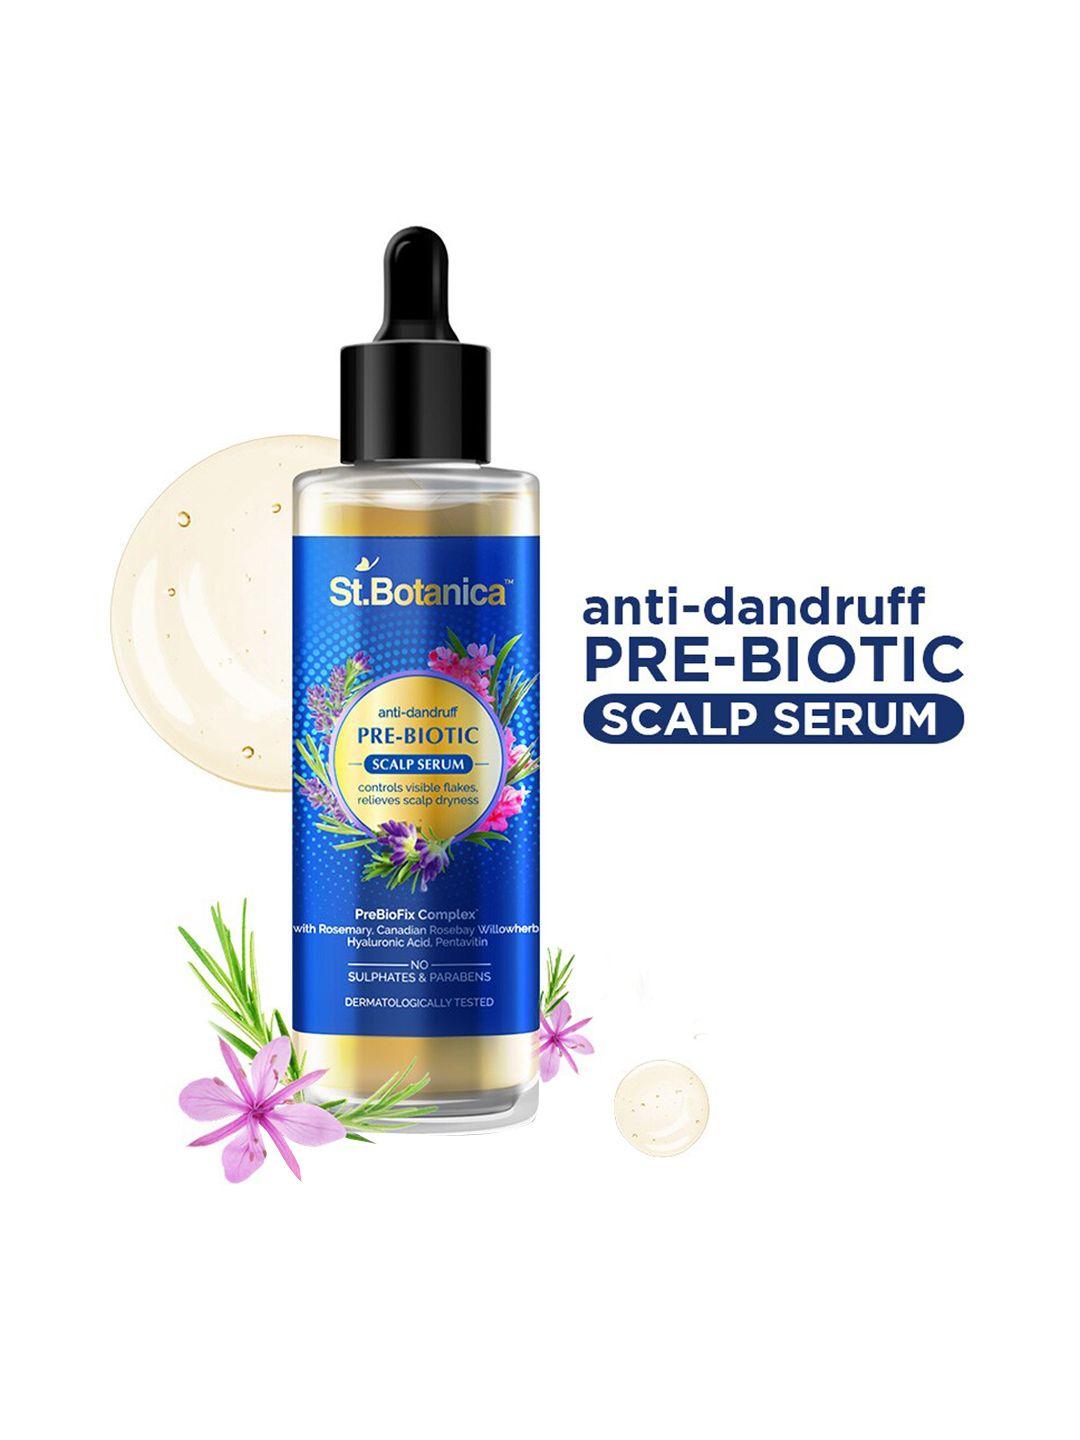 st.botanica anti-dandruff pre-biotic scalp serum to relive dryness & control flakes - 60ml